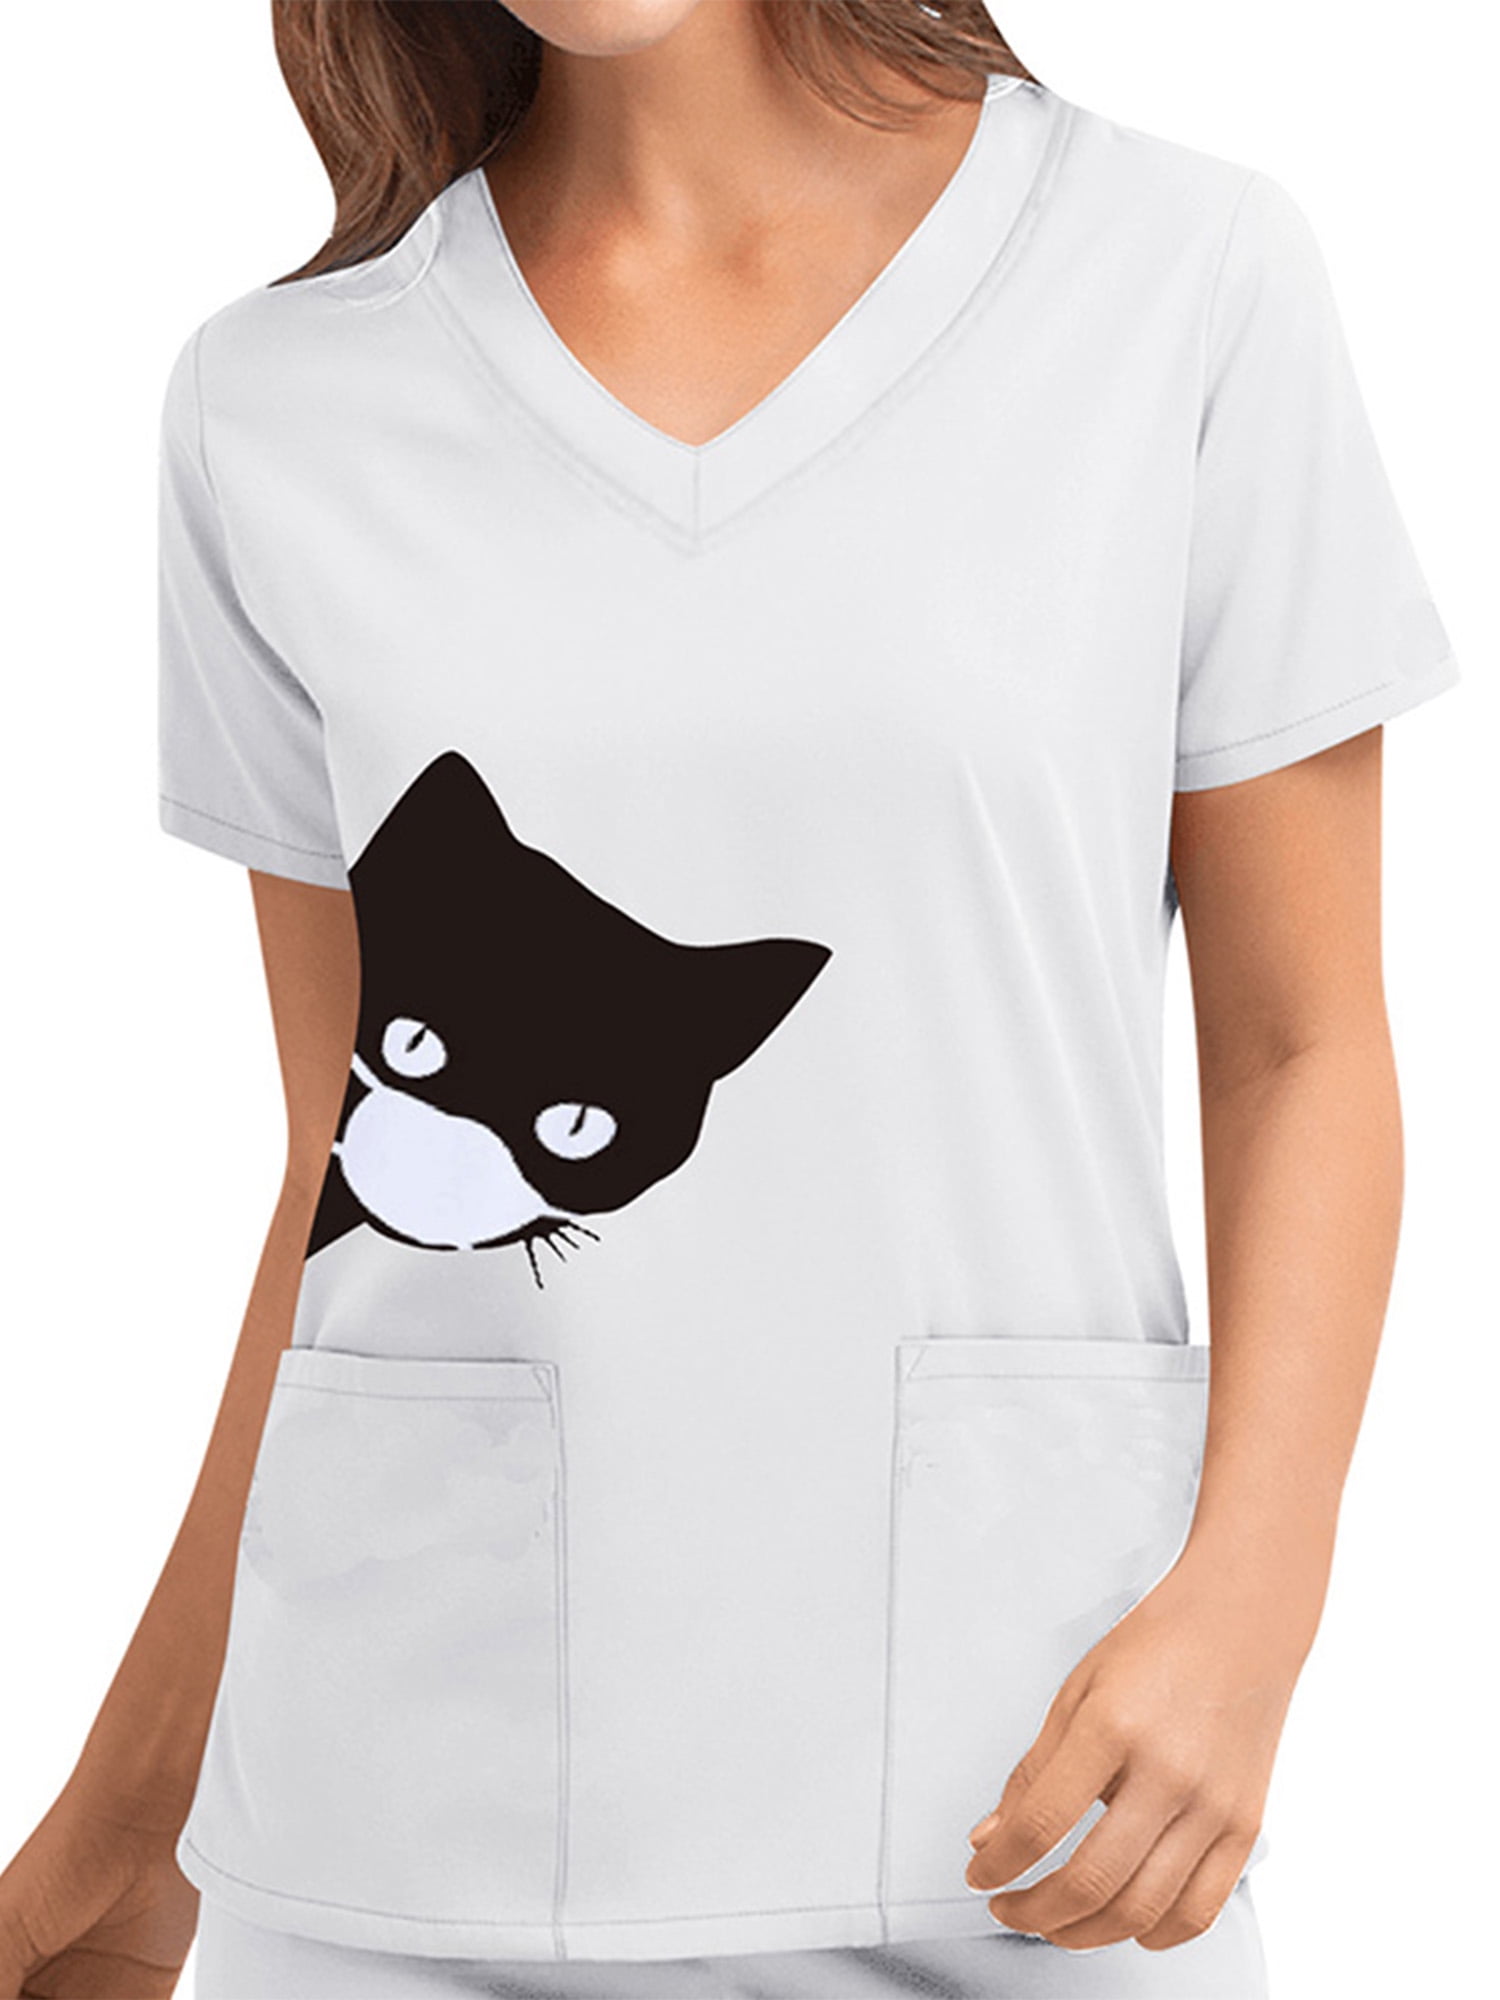 Womens Tops Miuye Summer Cute Cat Print Tops Short Sleeve T-Shirts Blouse Tunic Graphic tees Tanks 